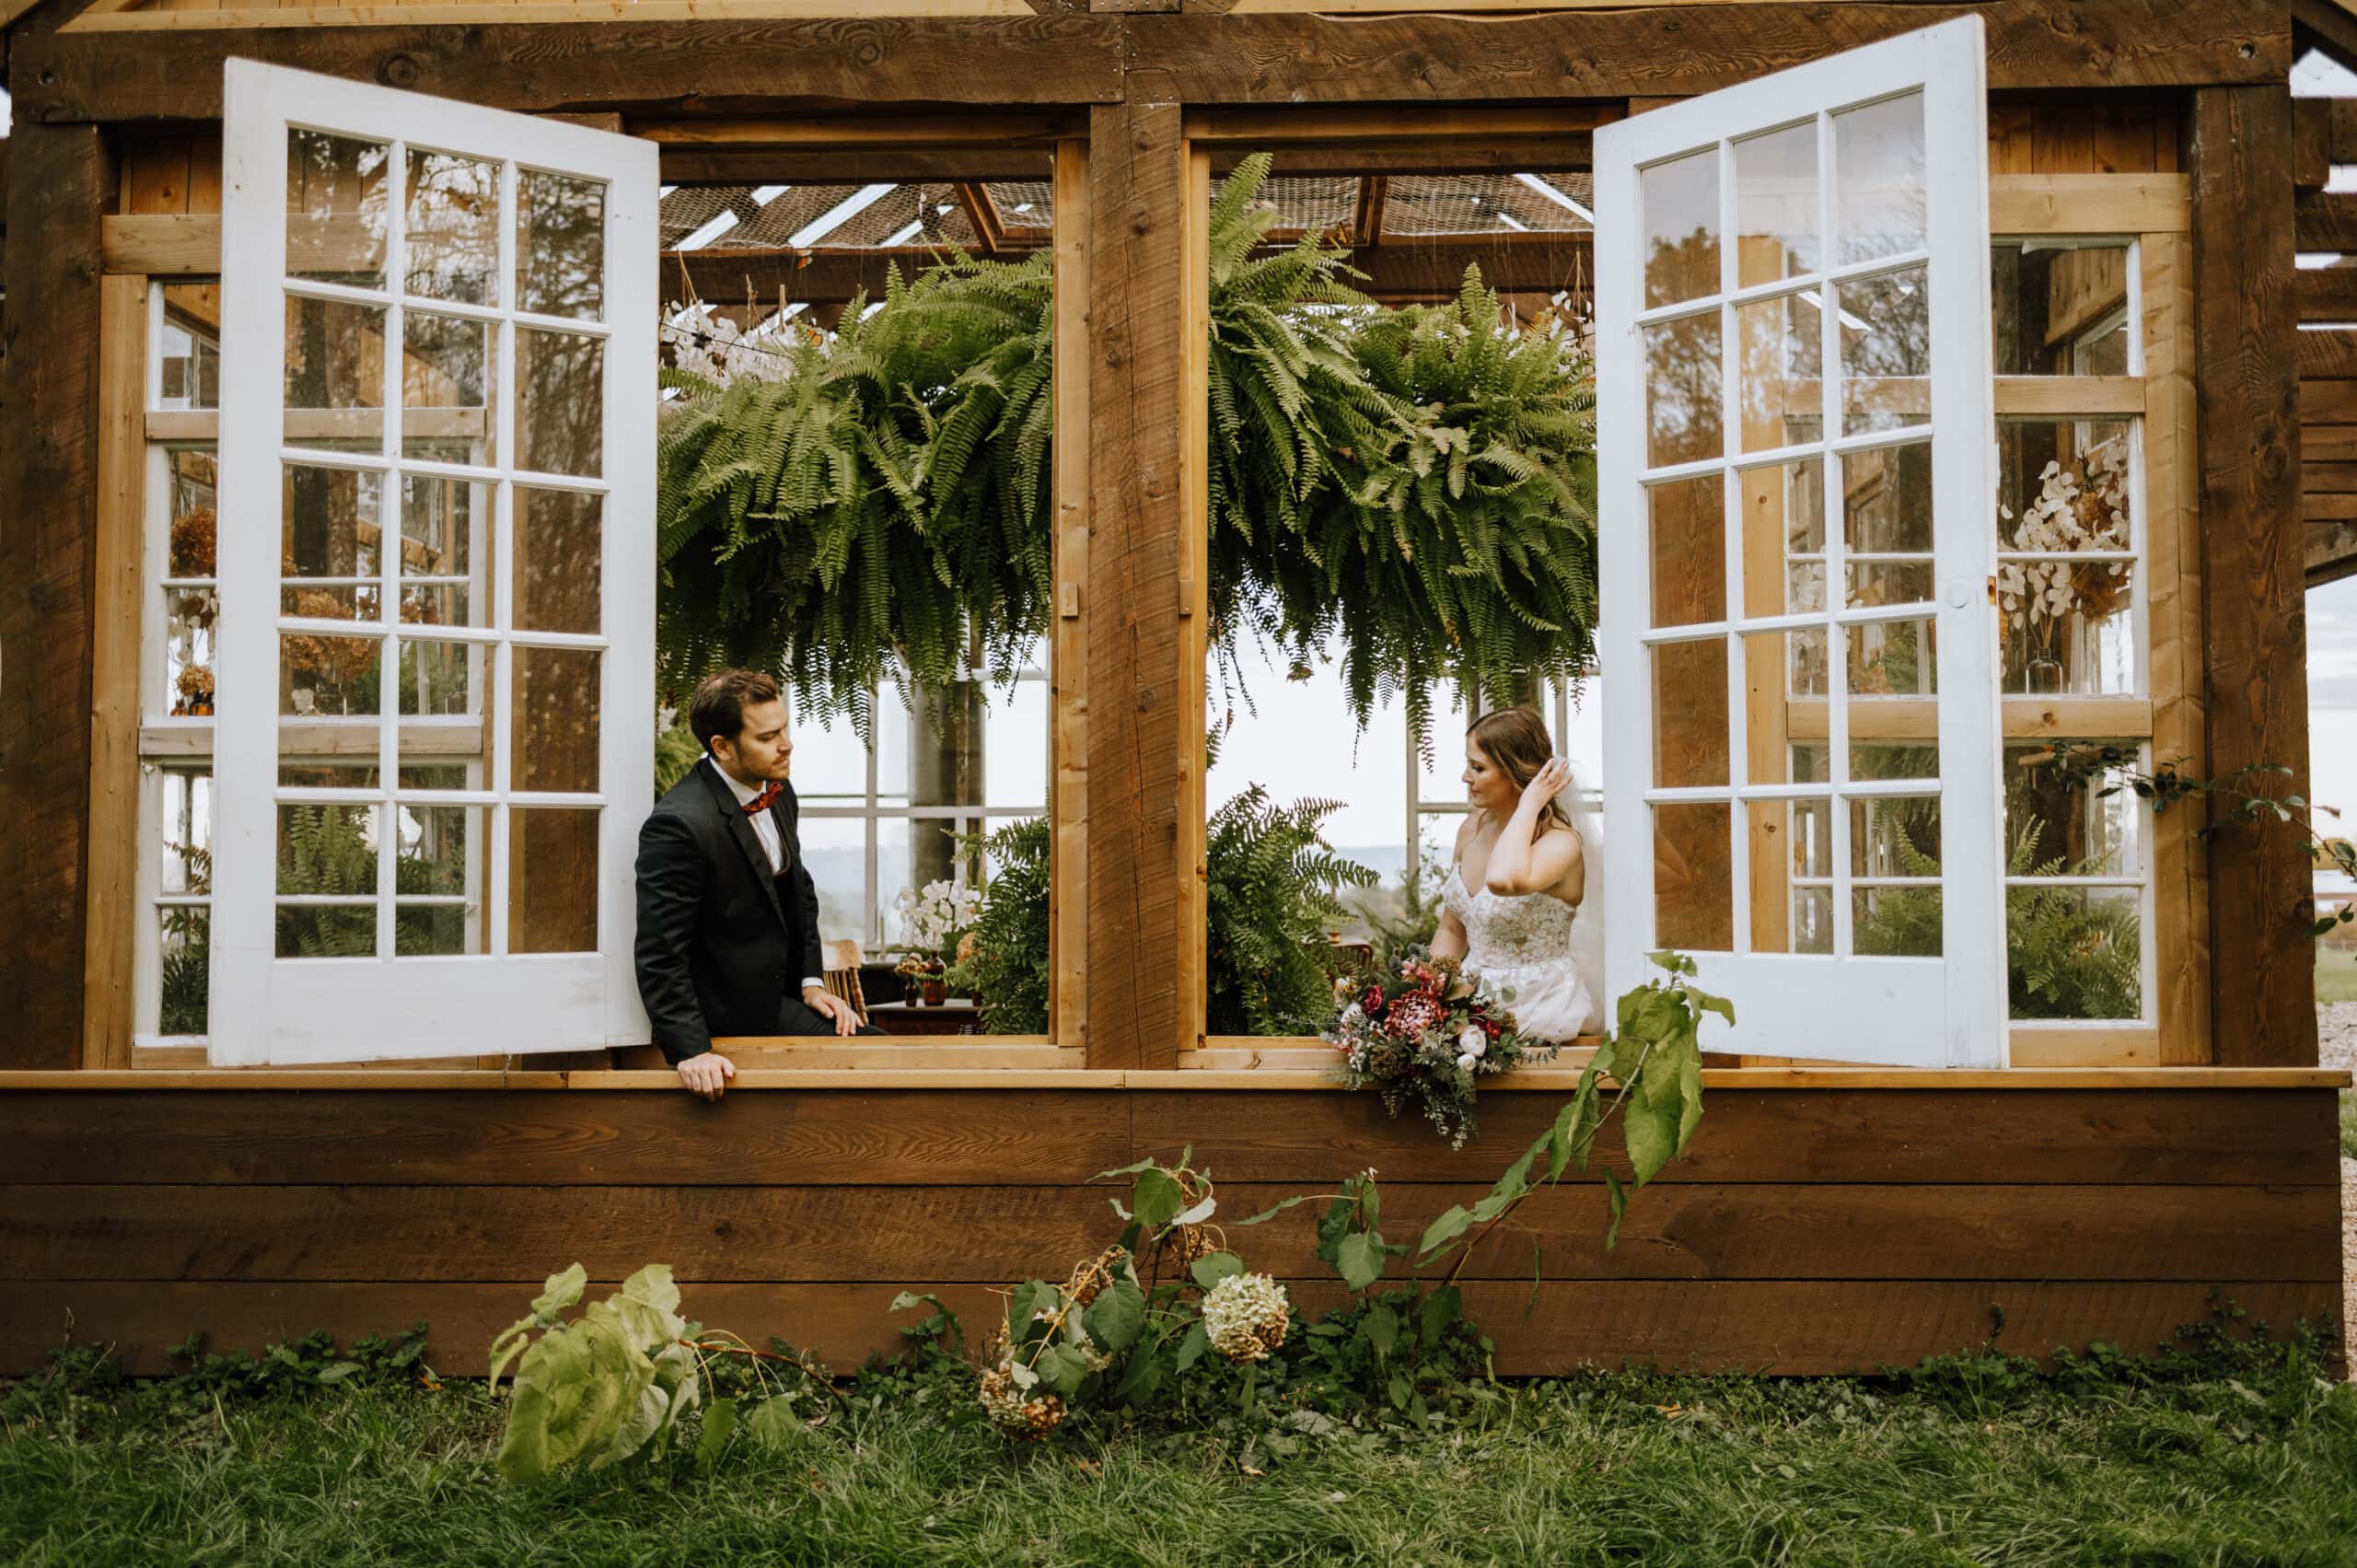 Wedding photographer in Nova Scotia photos by Michaela Bell Photography